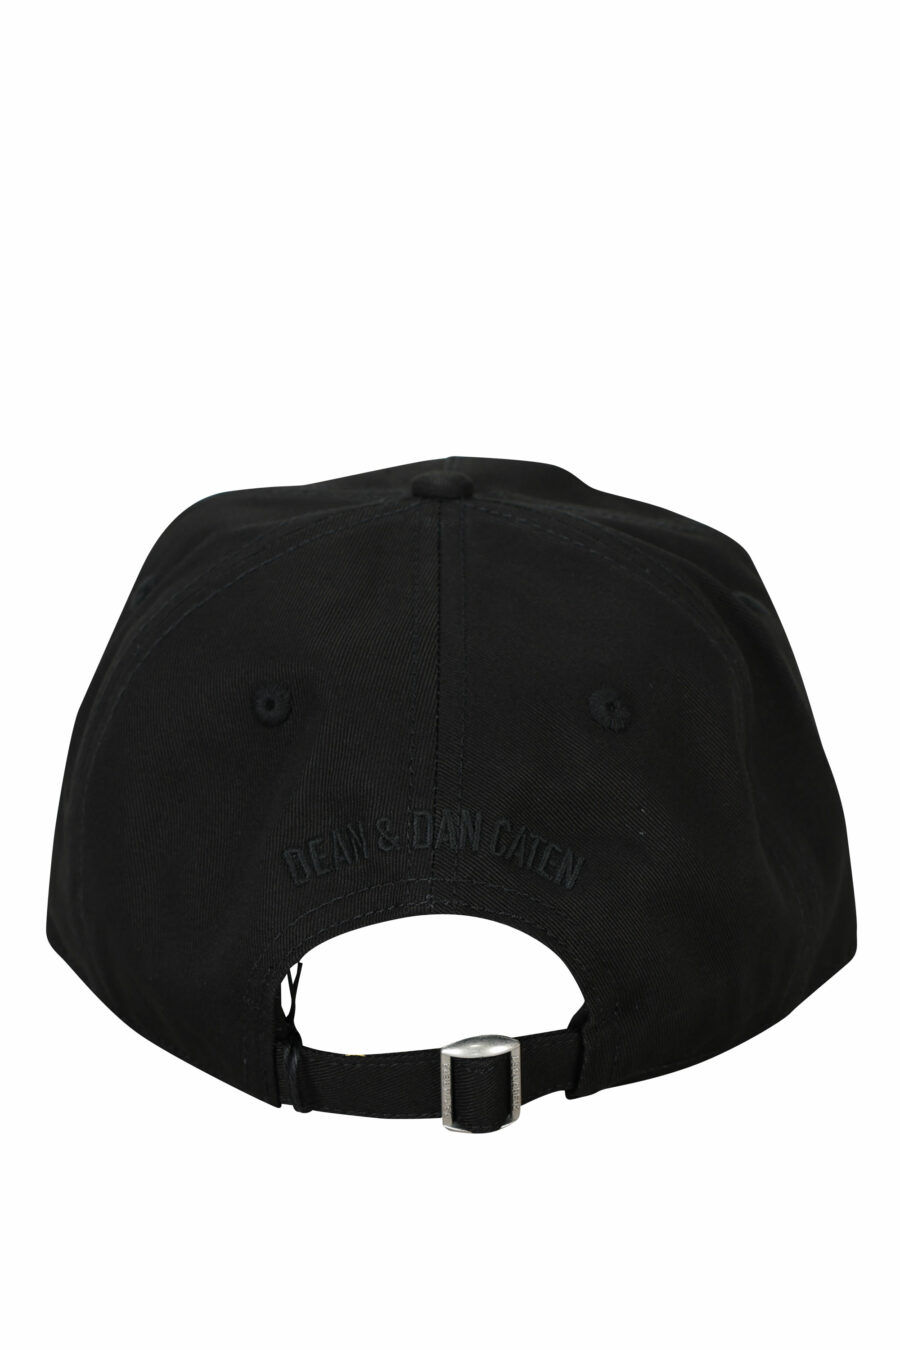 Schwarze Kappe mit einfarbiger "Ikone" maxilogue - 8055777275689 1